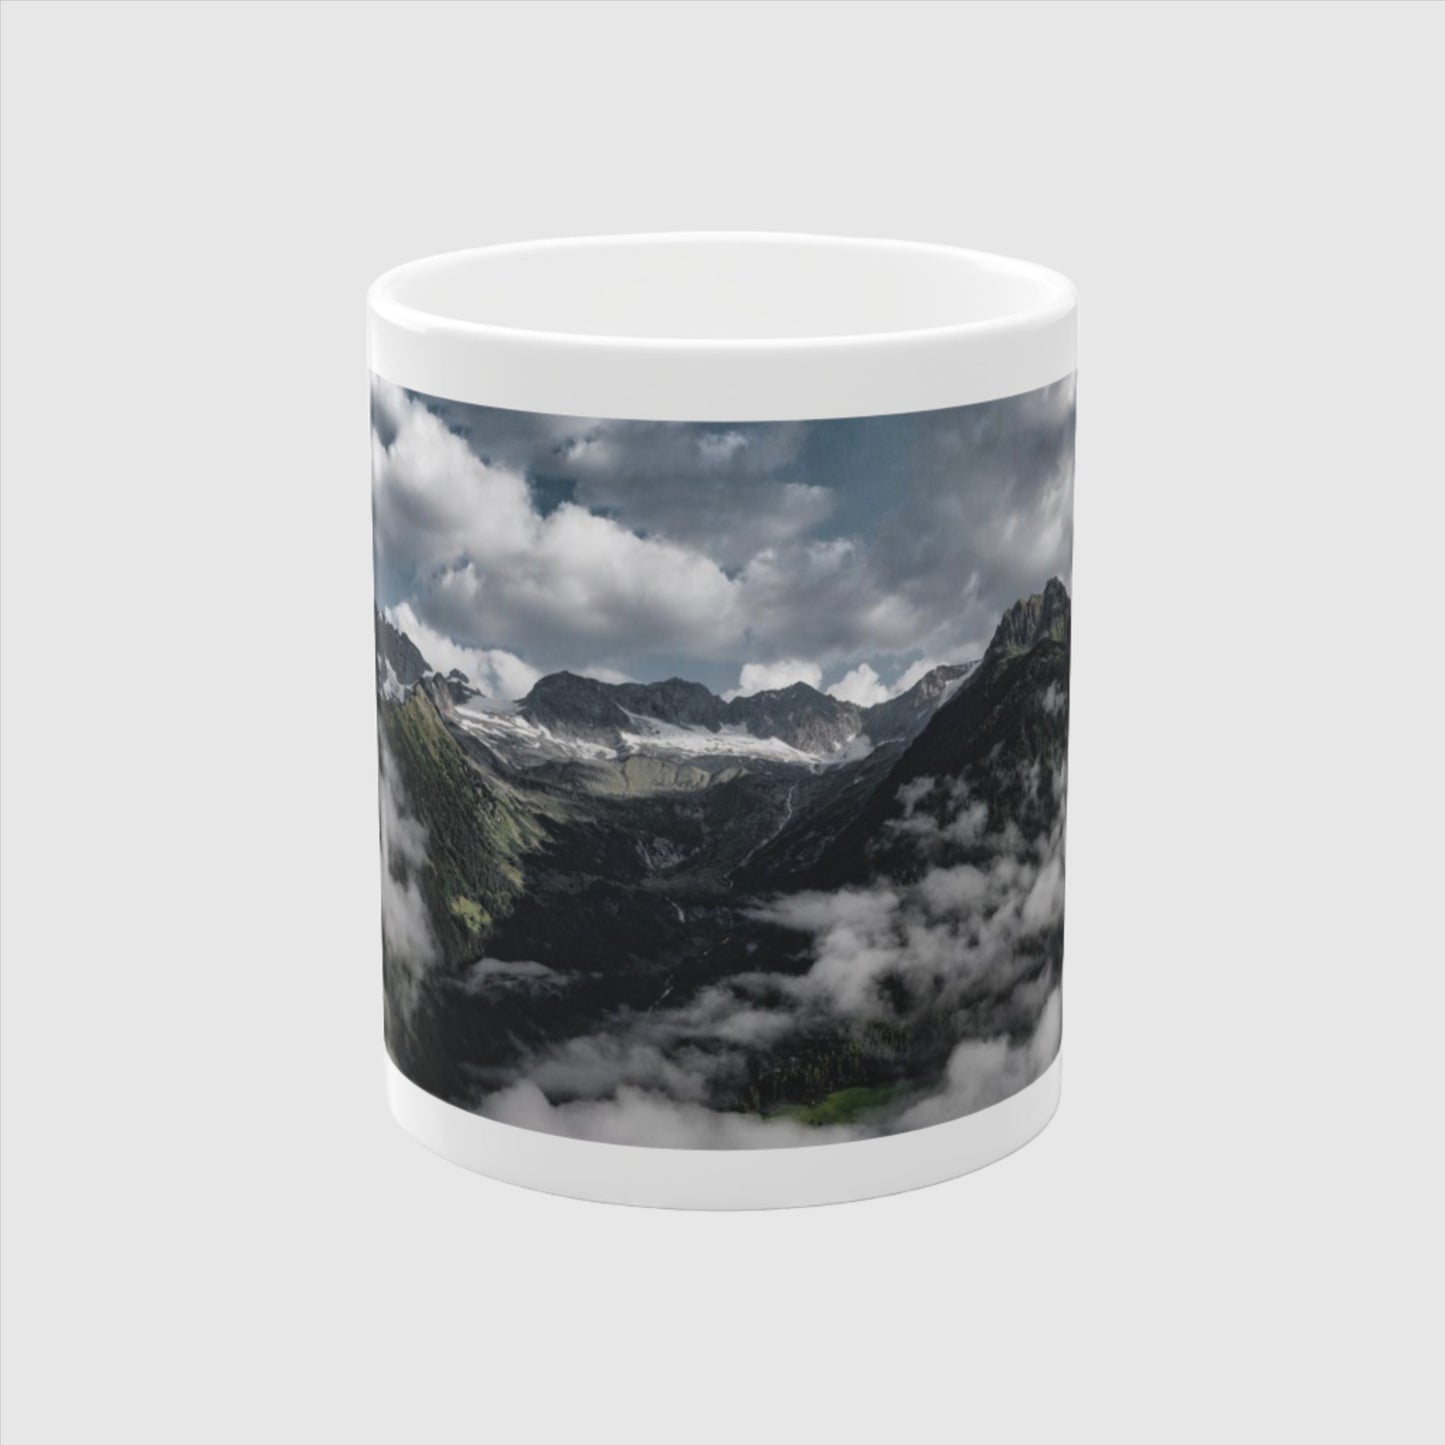 Mountains Picture Print Standard Mug, 11oz